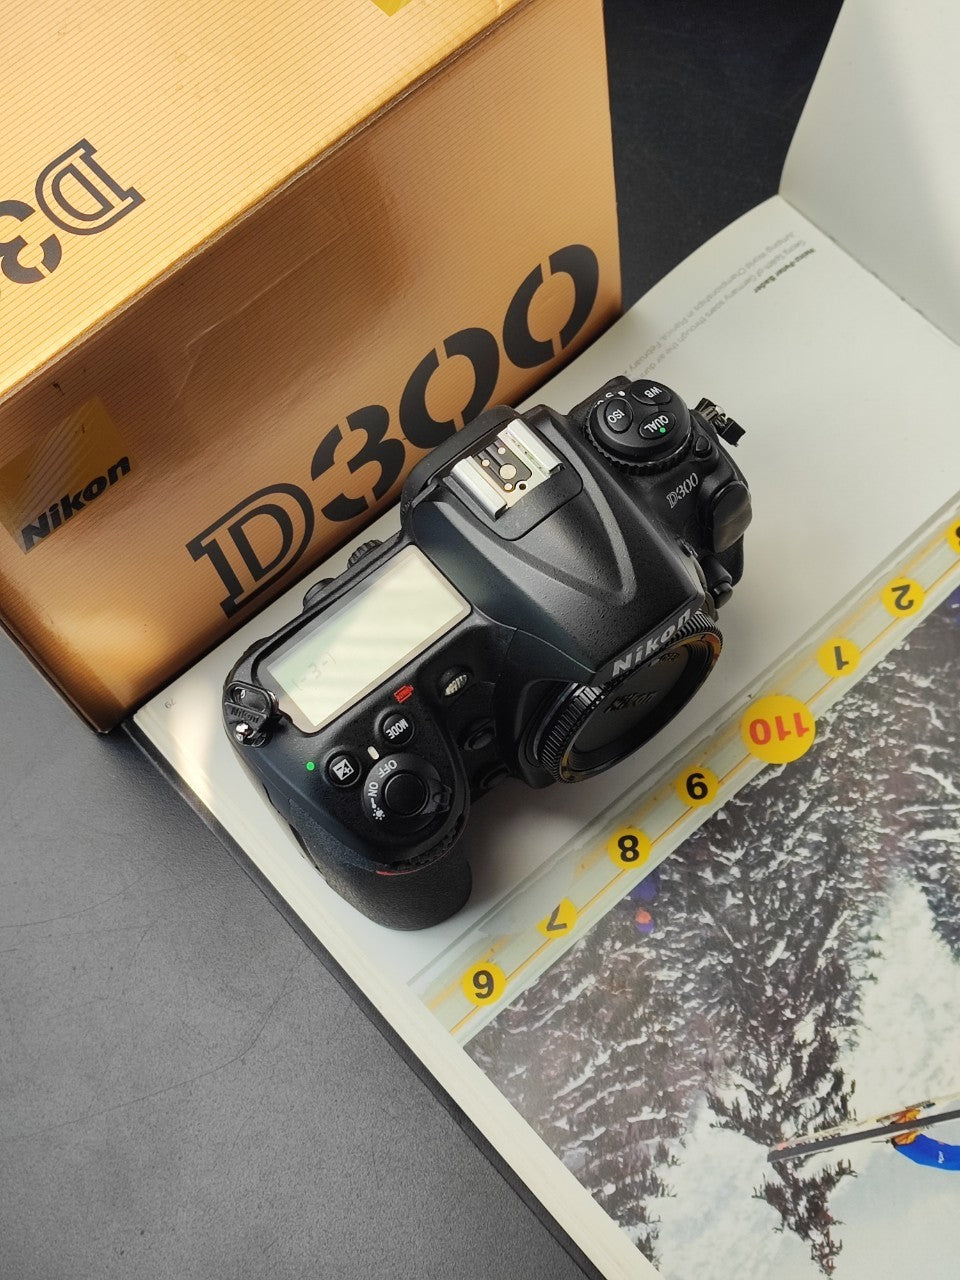 Nikon D300 Digital Camera with box